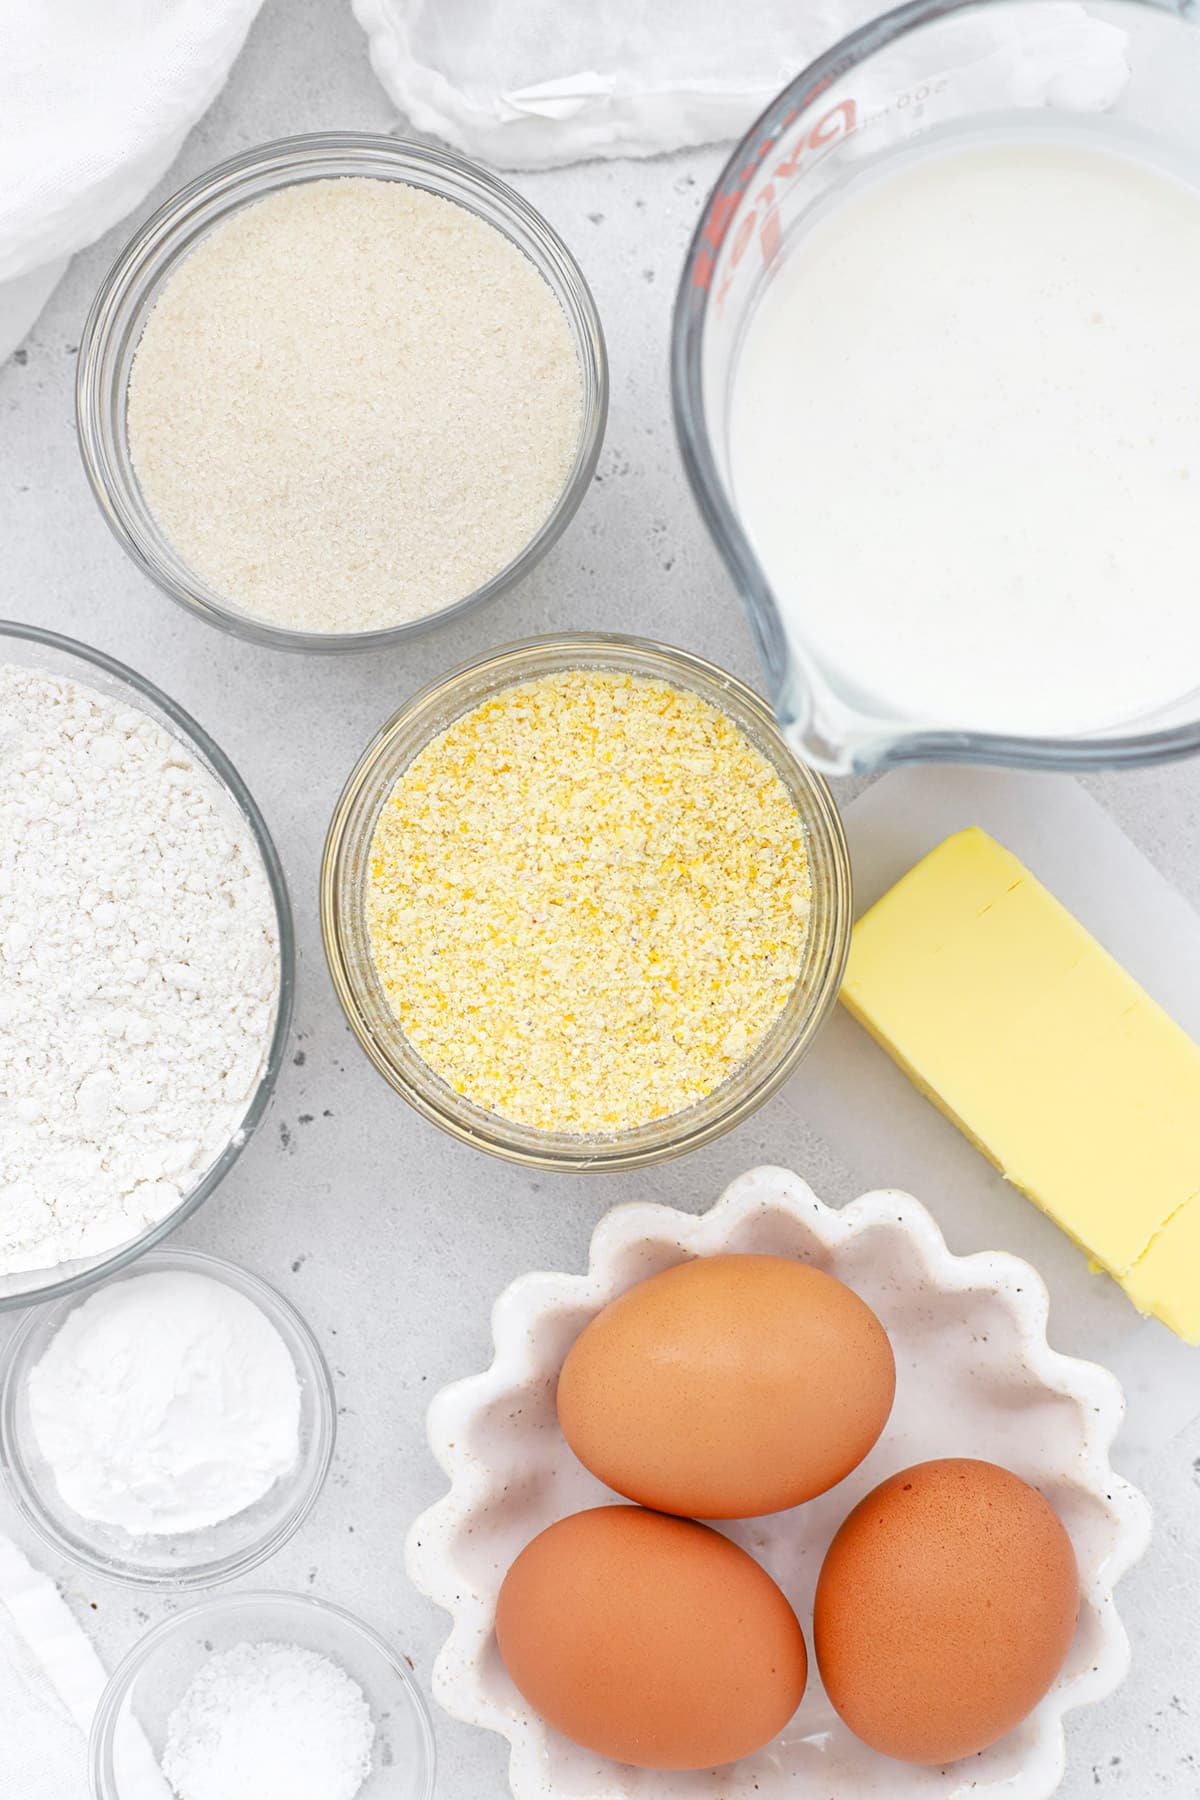 Overhead view of ingredients for gluten-free cornbread